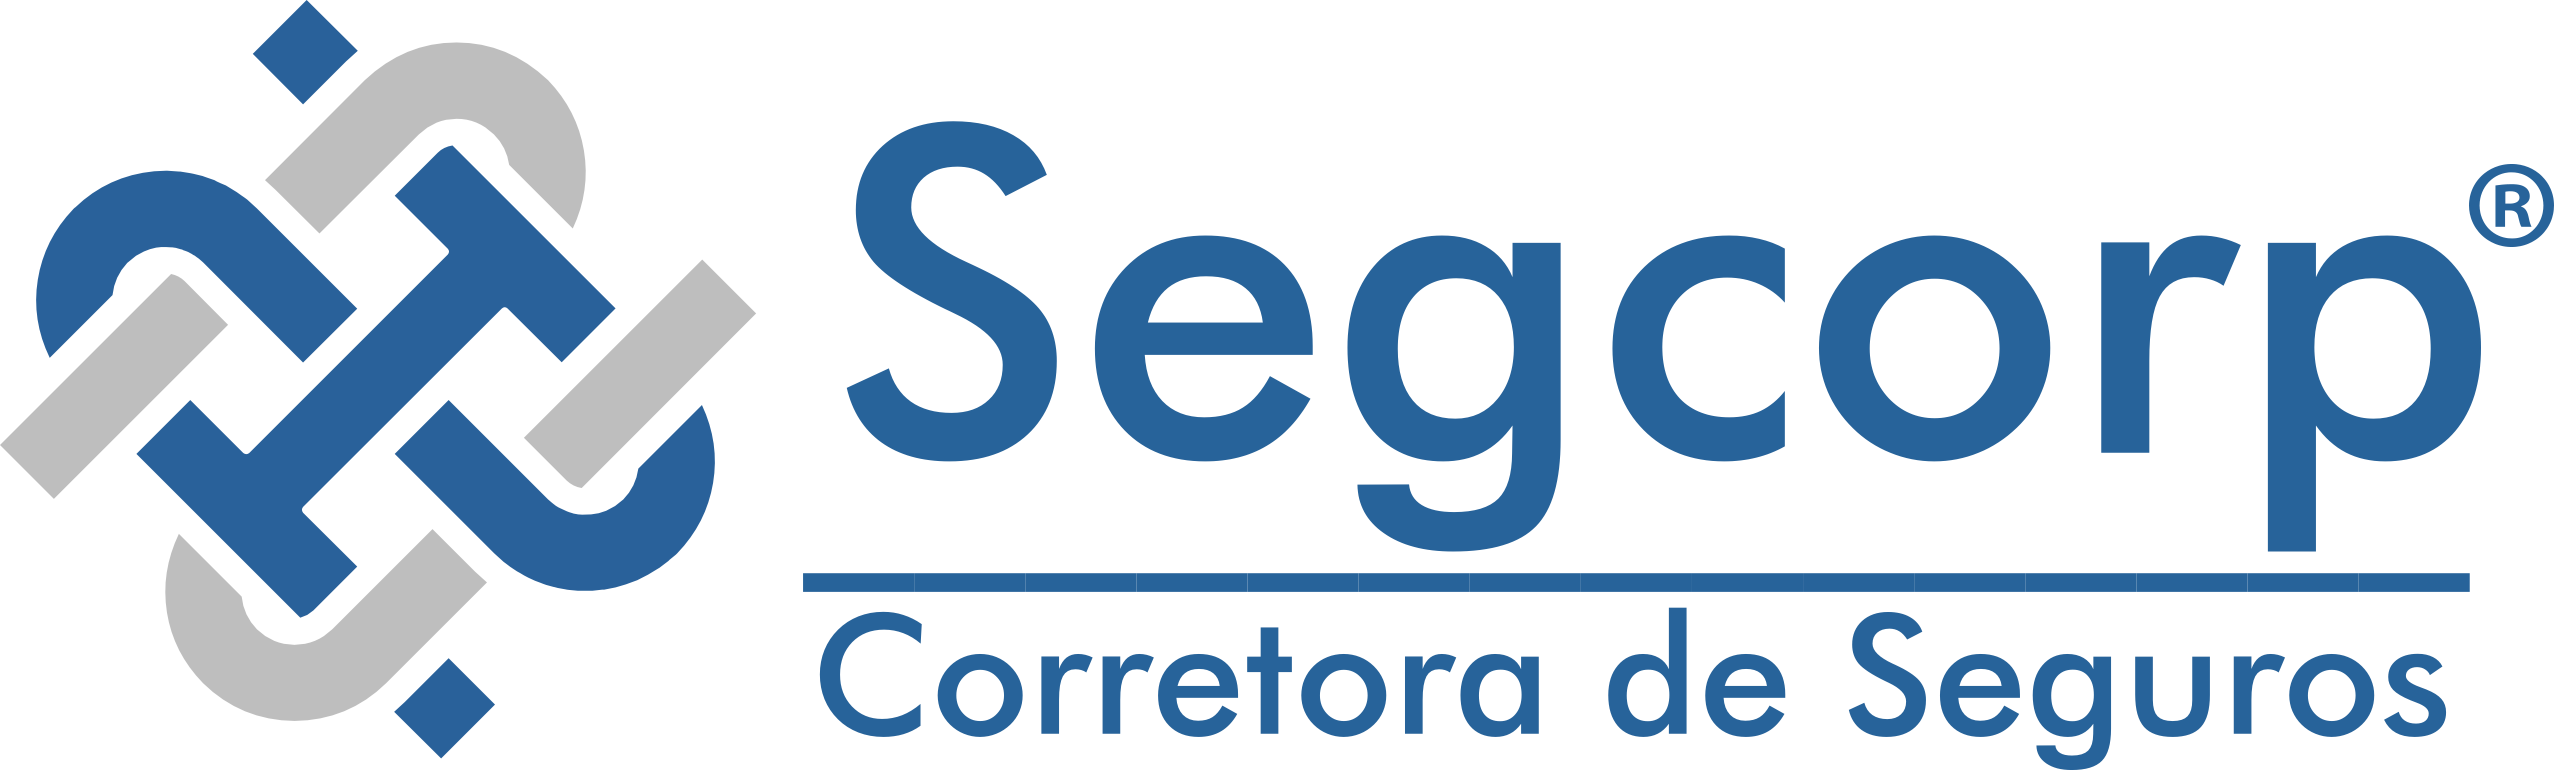 Segcorp